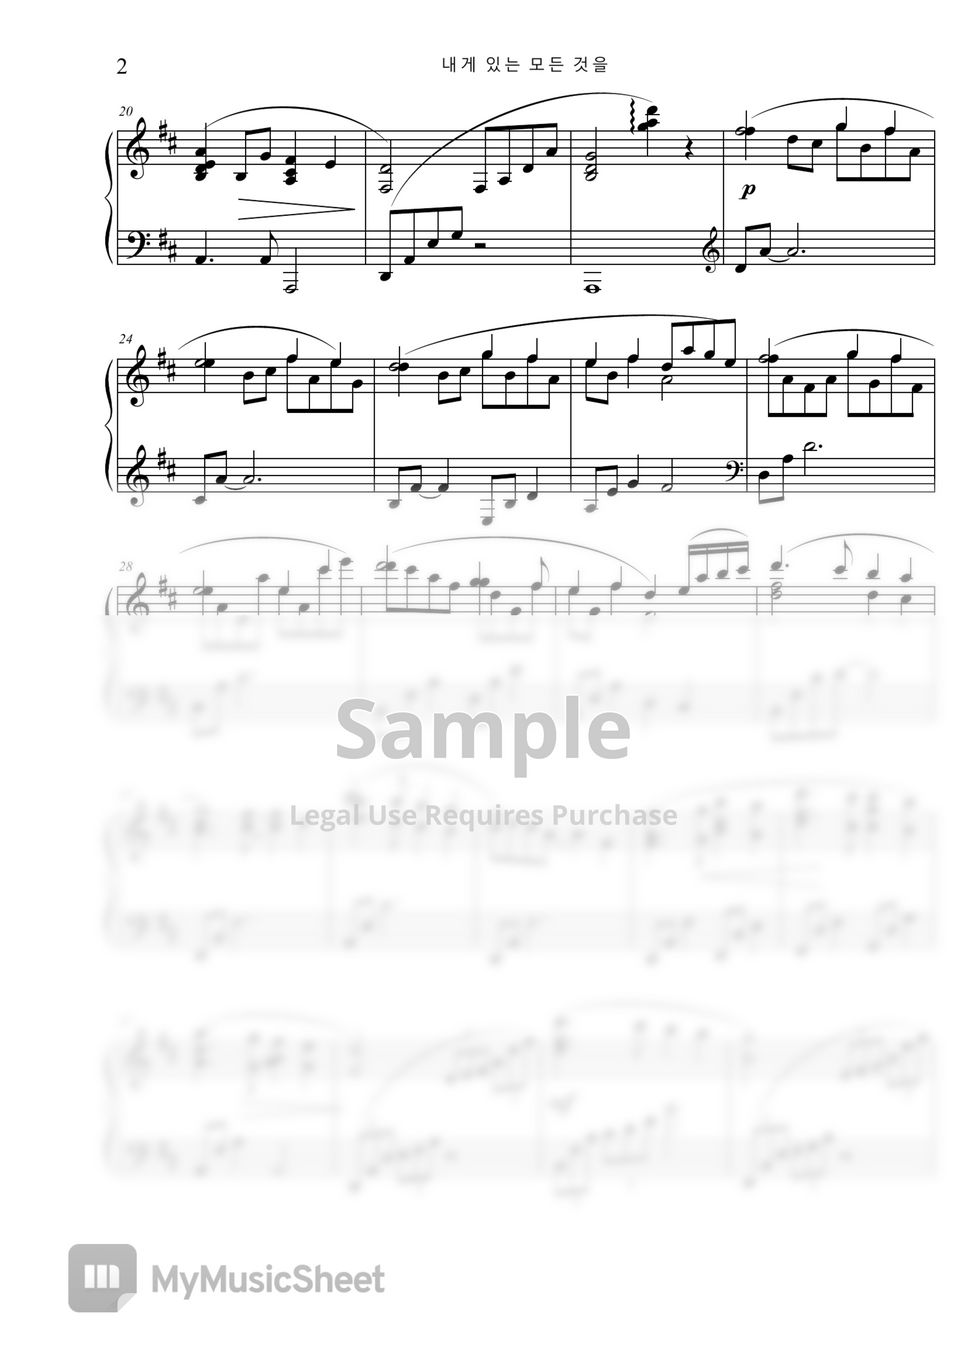 hymn - I surrender all(내게 있는 모든 것을) (피아노 헌금송) by Pianist Jin